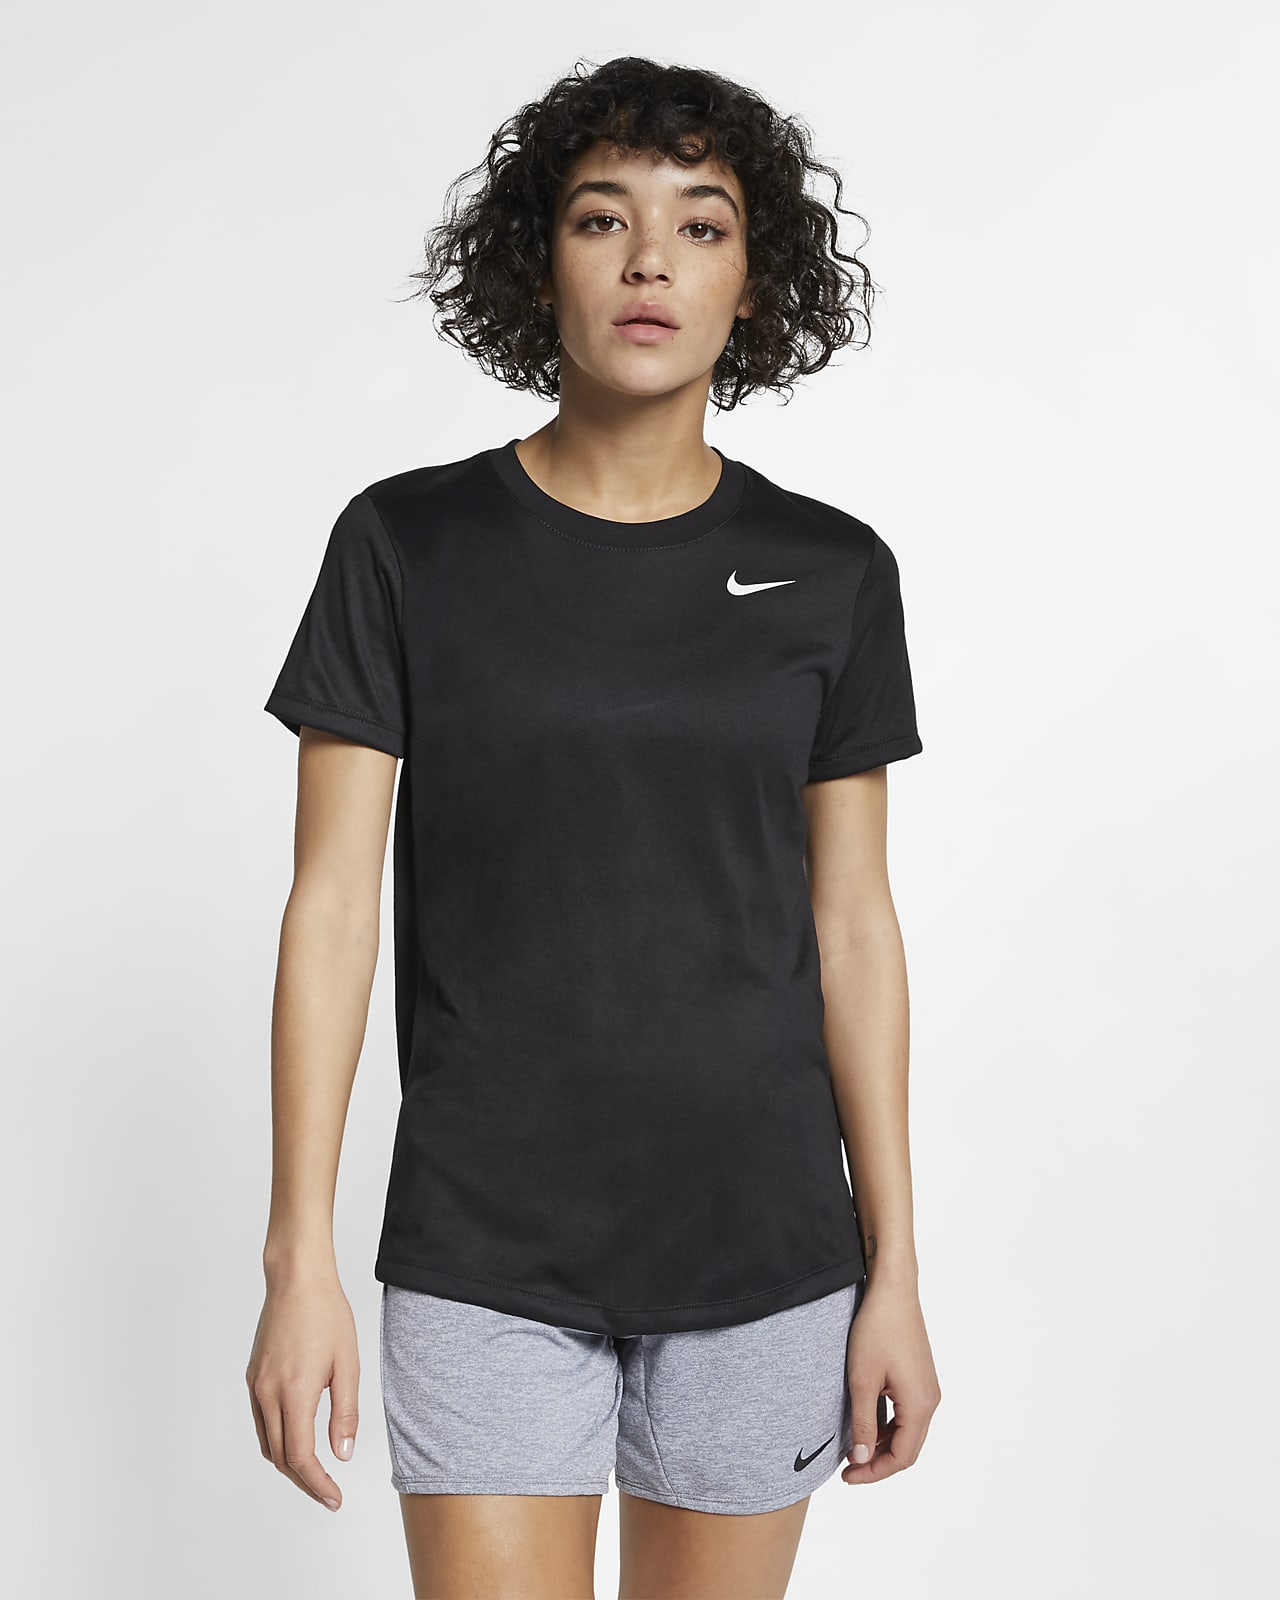 Nike Legend Women'S Training T-Shirt. Nike Vn